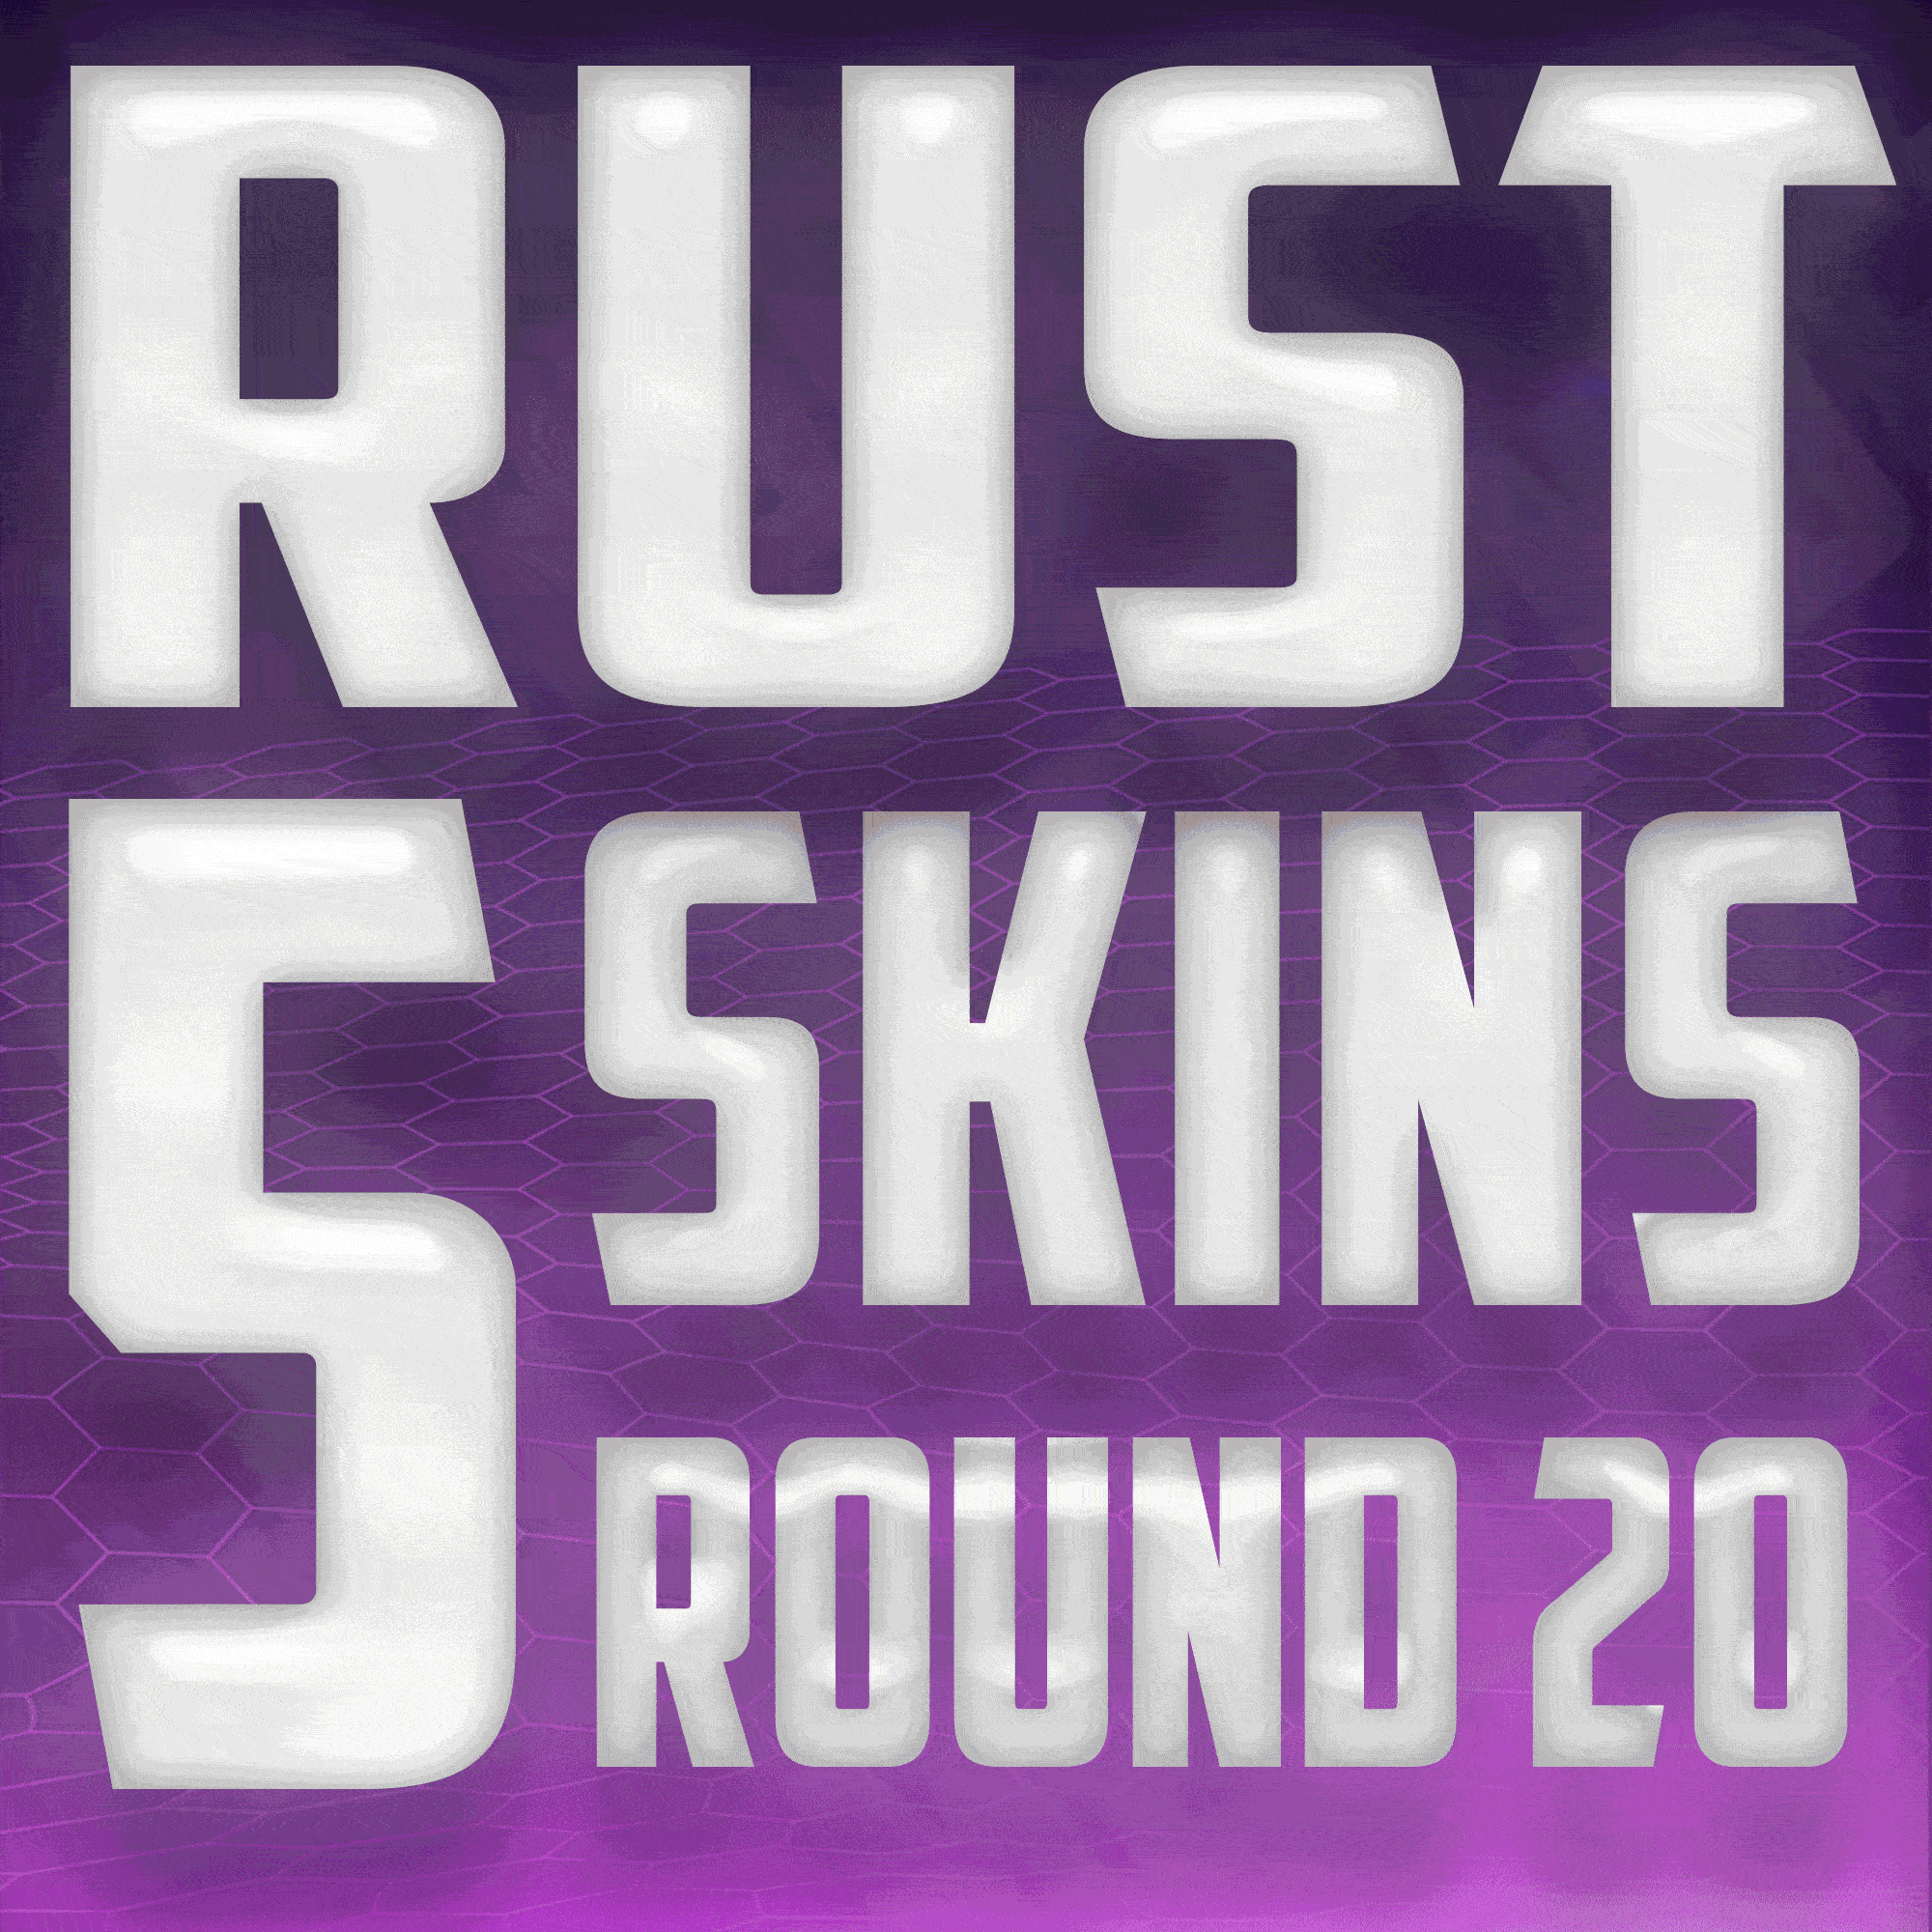 Rust twitch drops round 11 когда фото 80